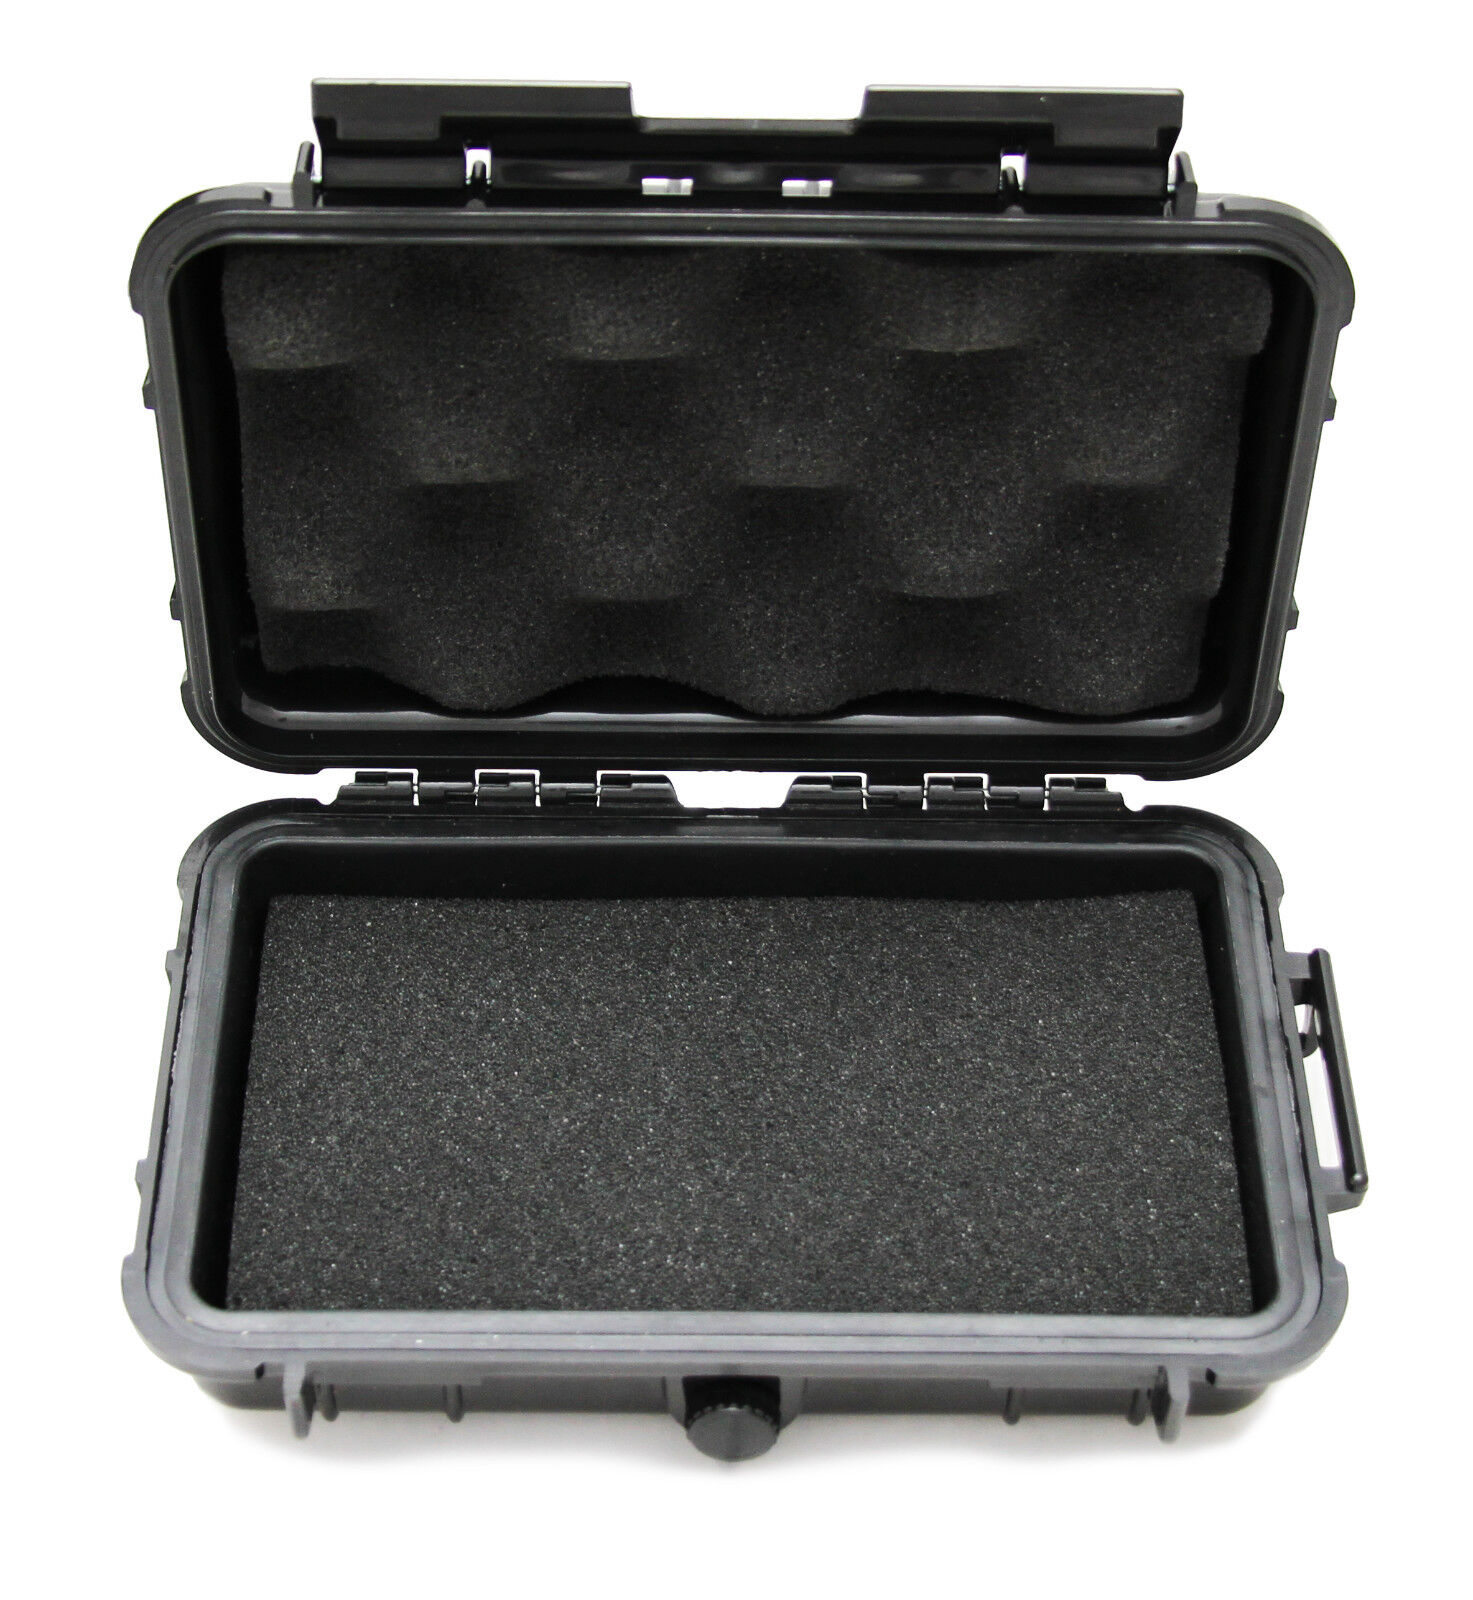 Waterproof Hotspot Case fits GlocalMe 2 and GlocalMe G3 4G LTE Mobile Hotspots